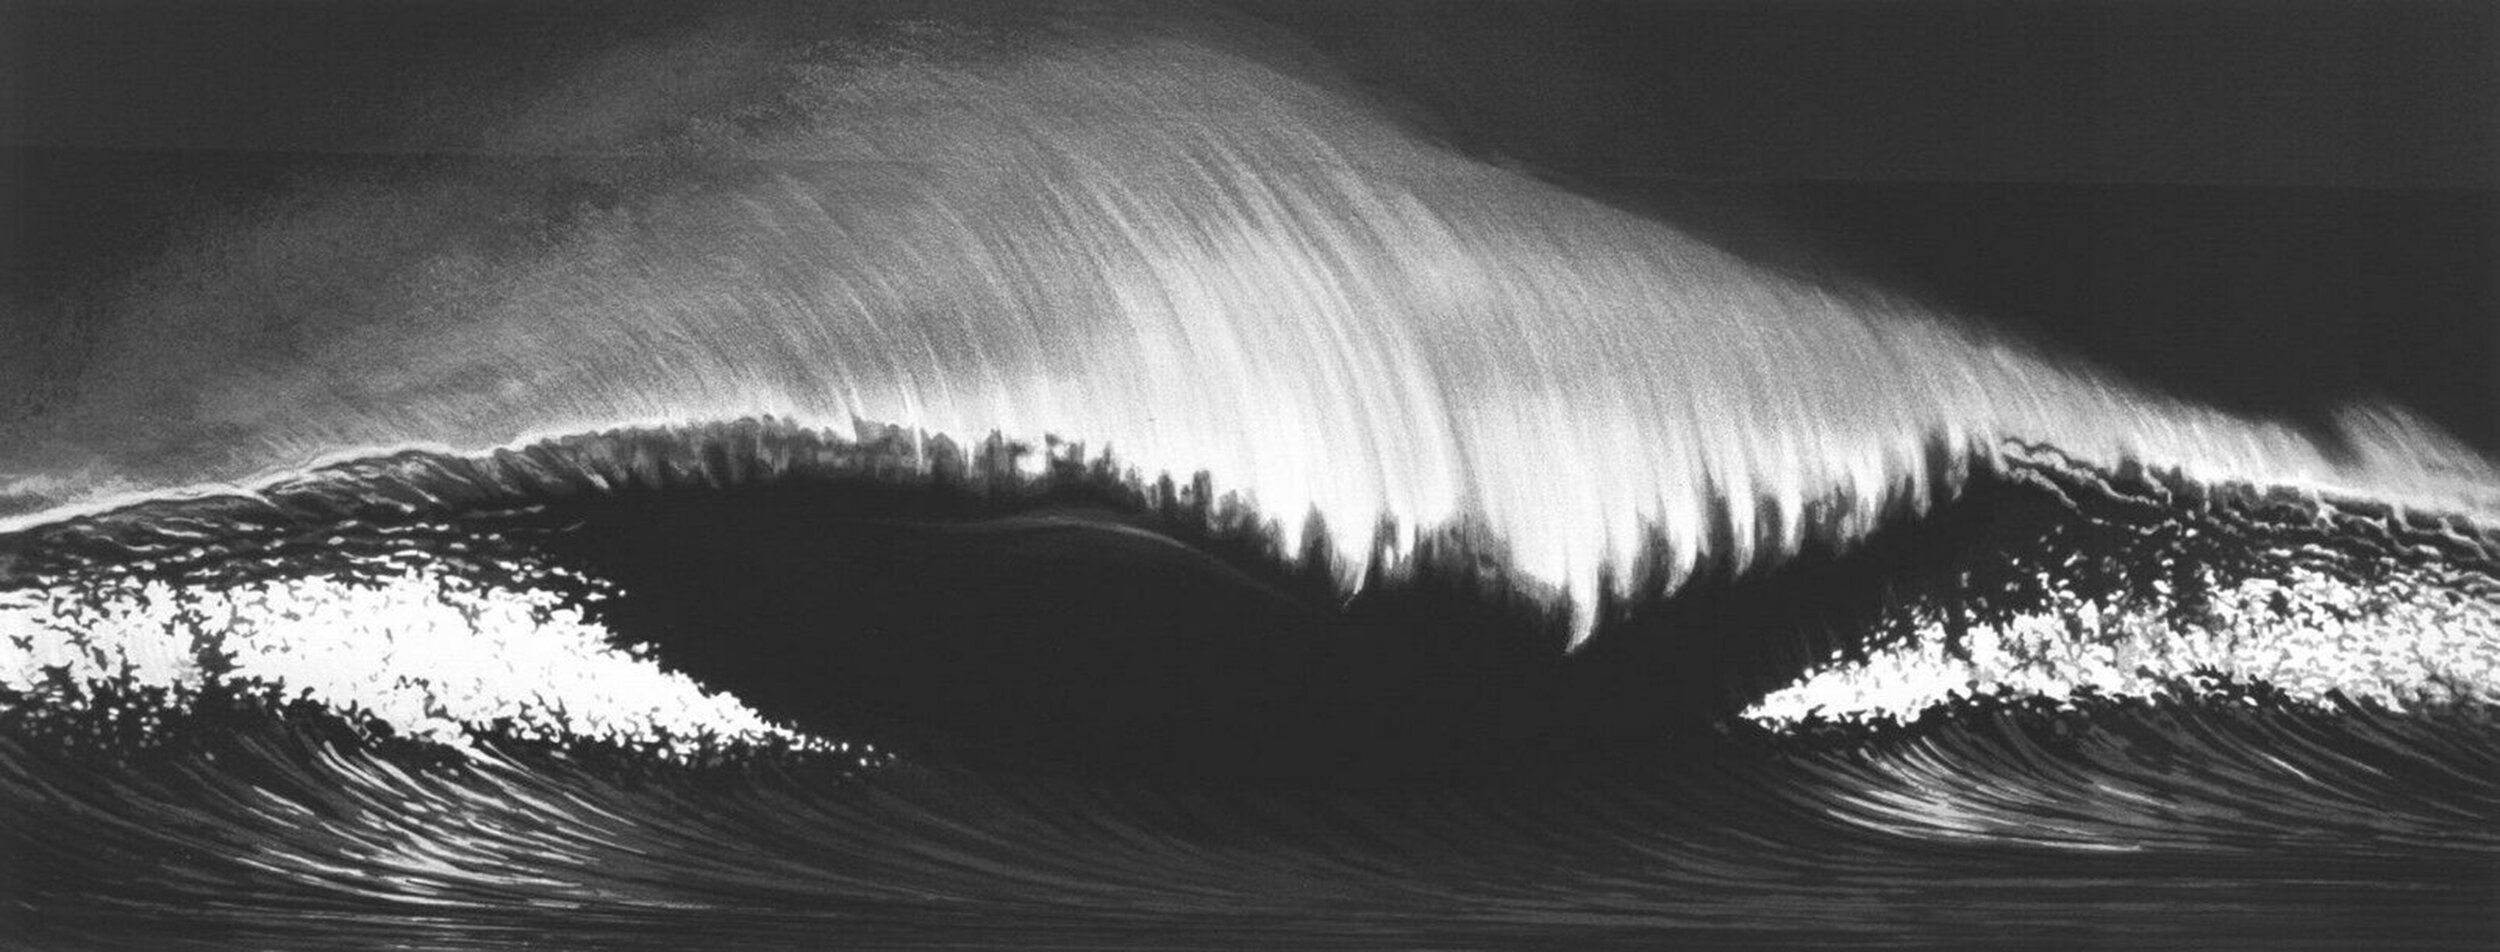 Robert Longo, Wave, 2003